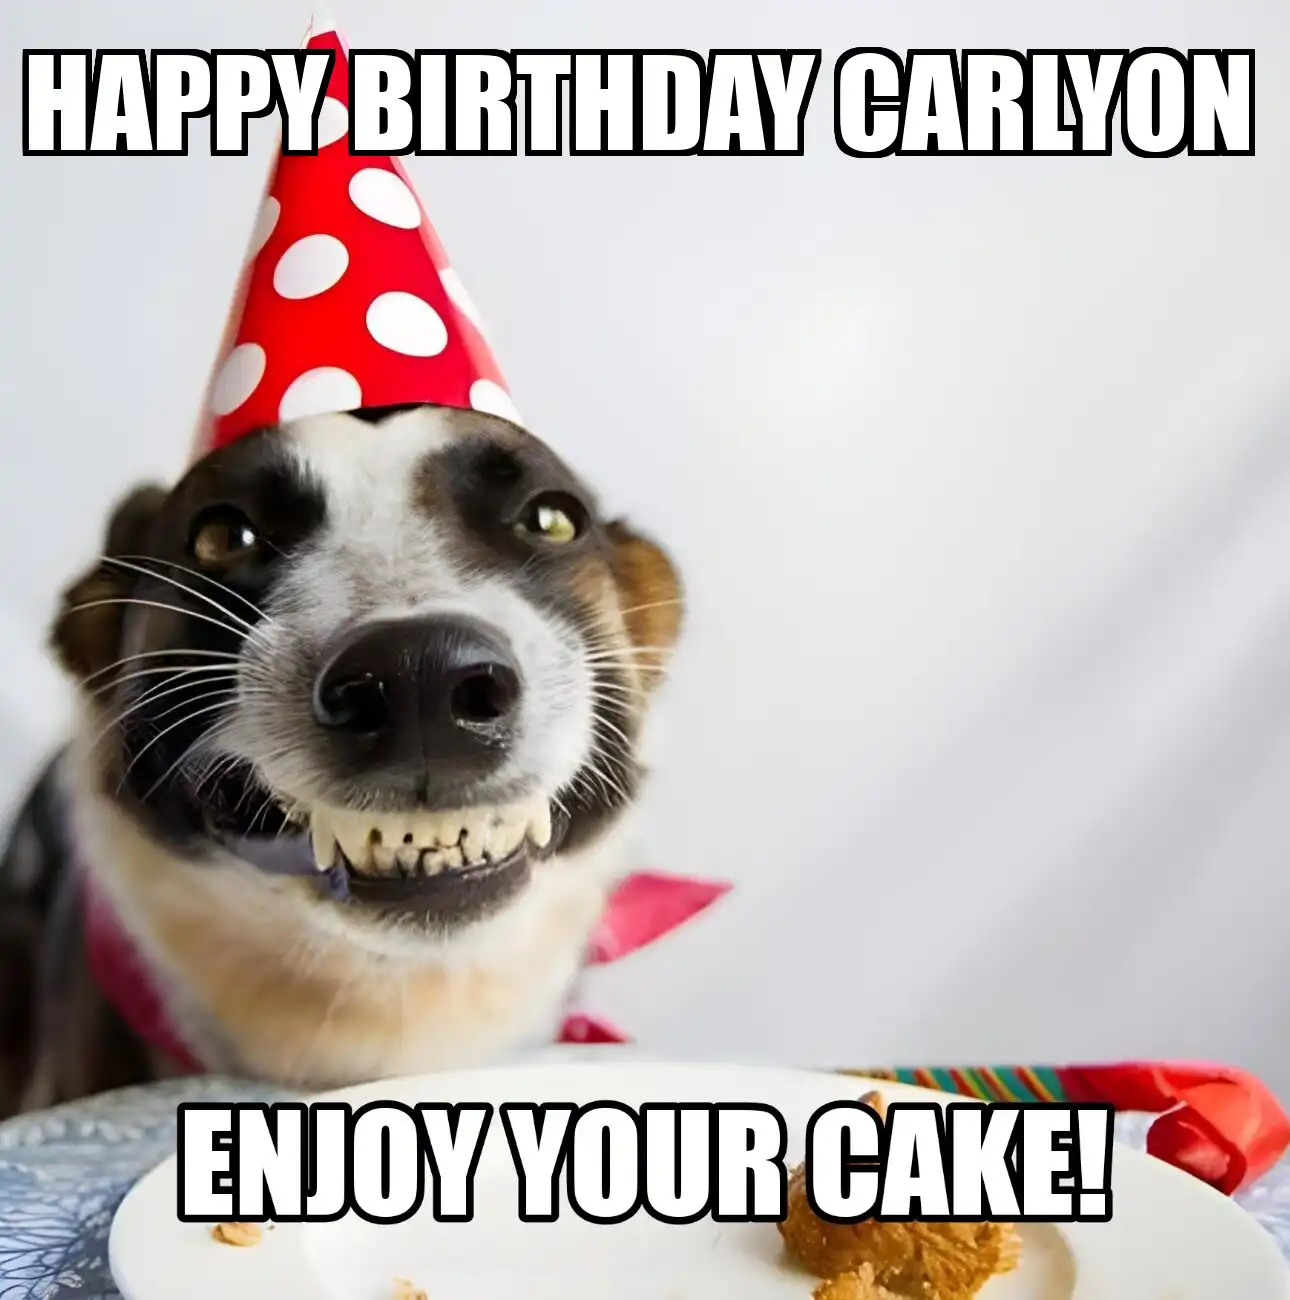 Happy Birthday Carlyon Enjoy Your Cake Dog Meme